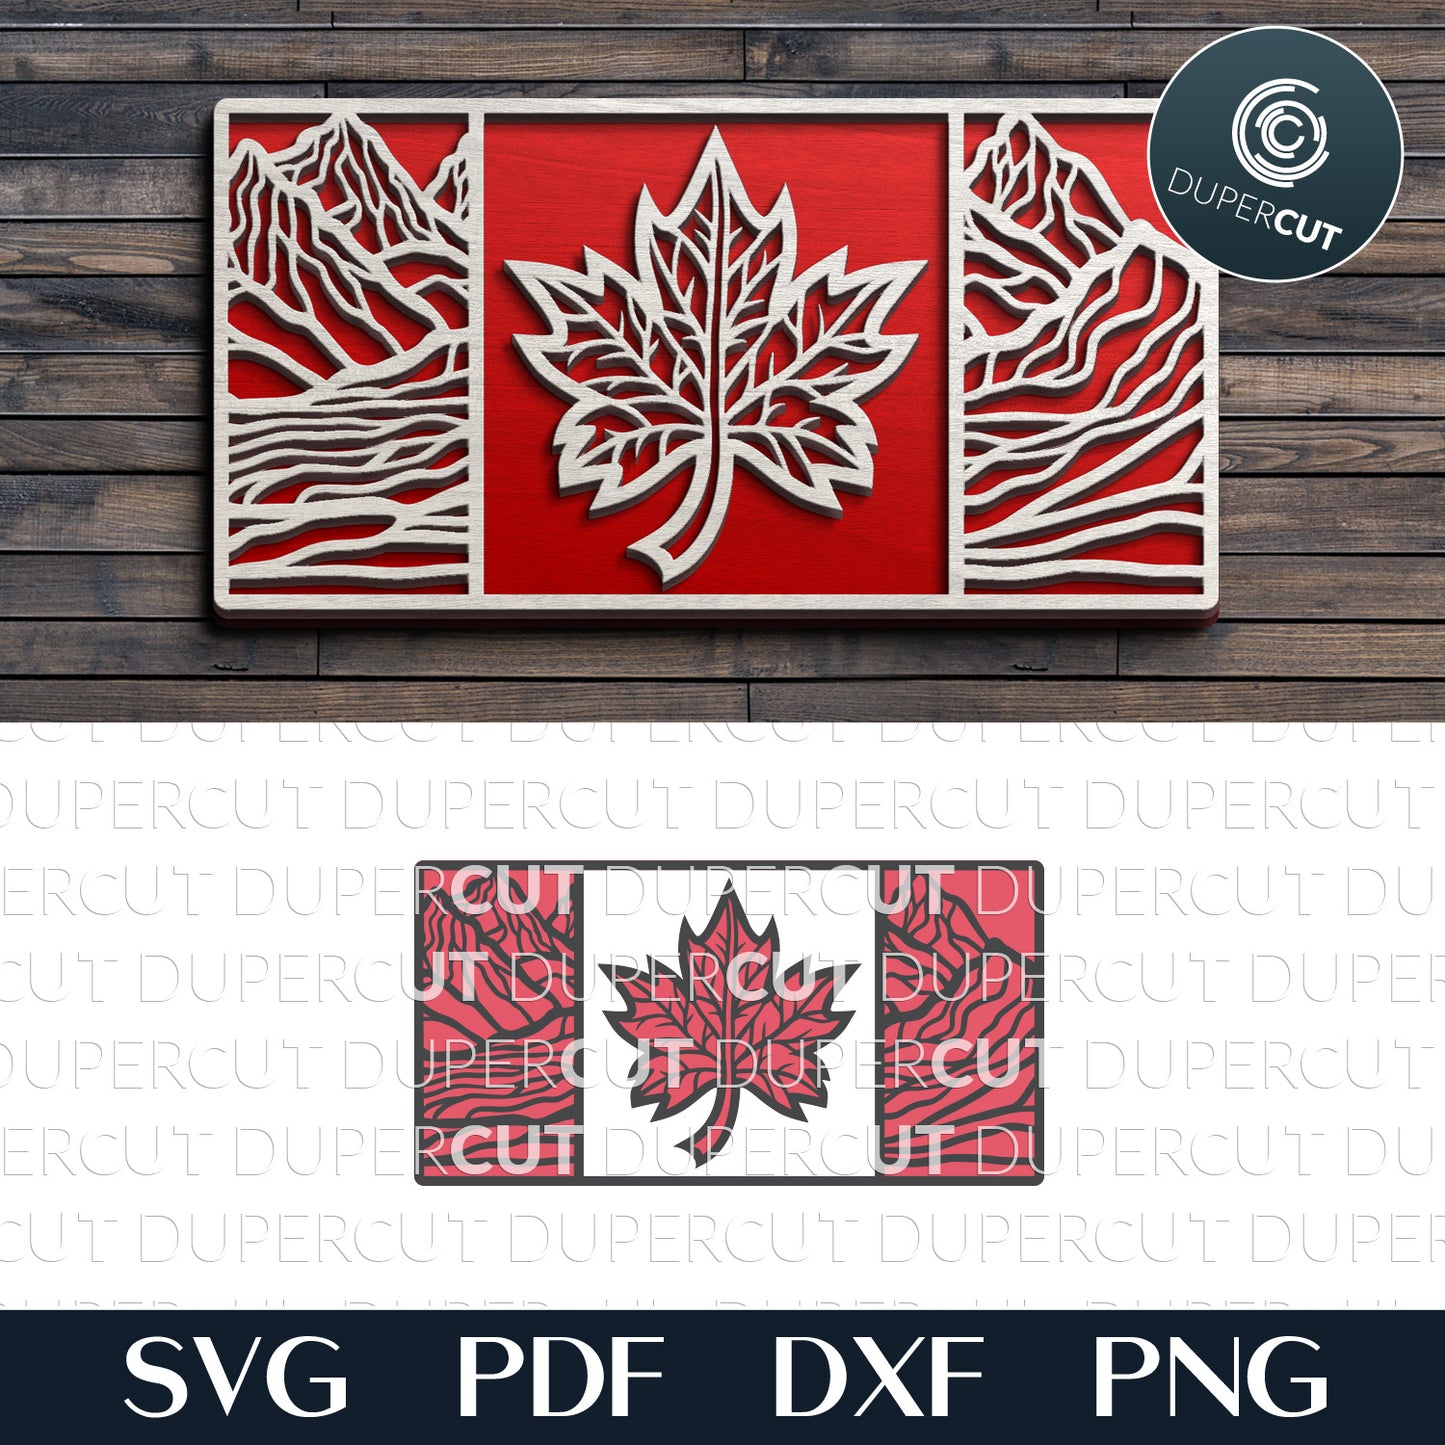 Maple leaf flag of Canada - SVG DXF layered cut files for laser and digital machines Glowforge, Cricut, Xtool, CNC plasma, scroll saw pattern by www.DuperCut.com